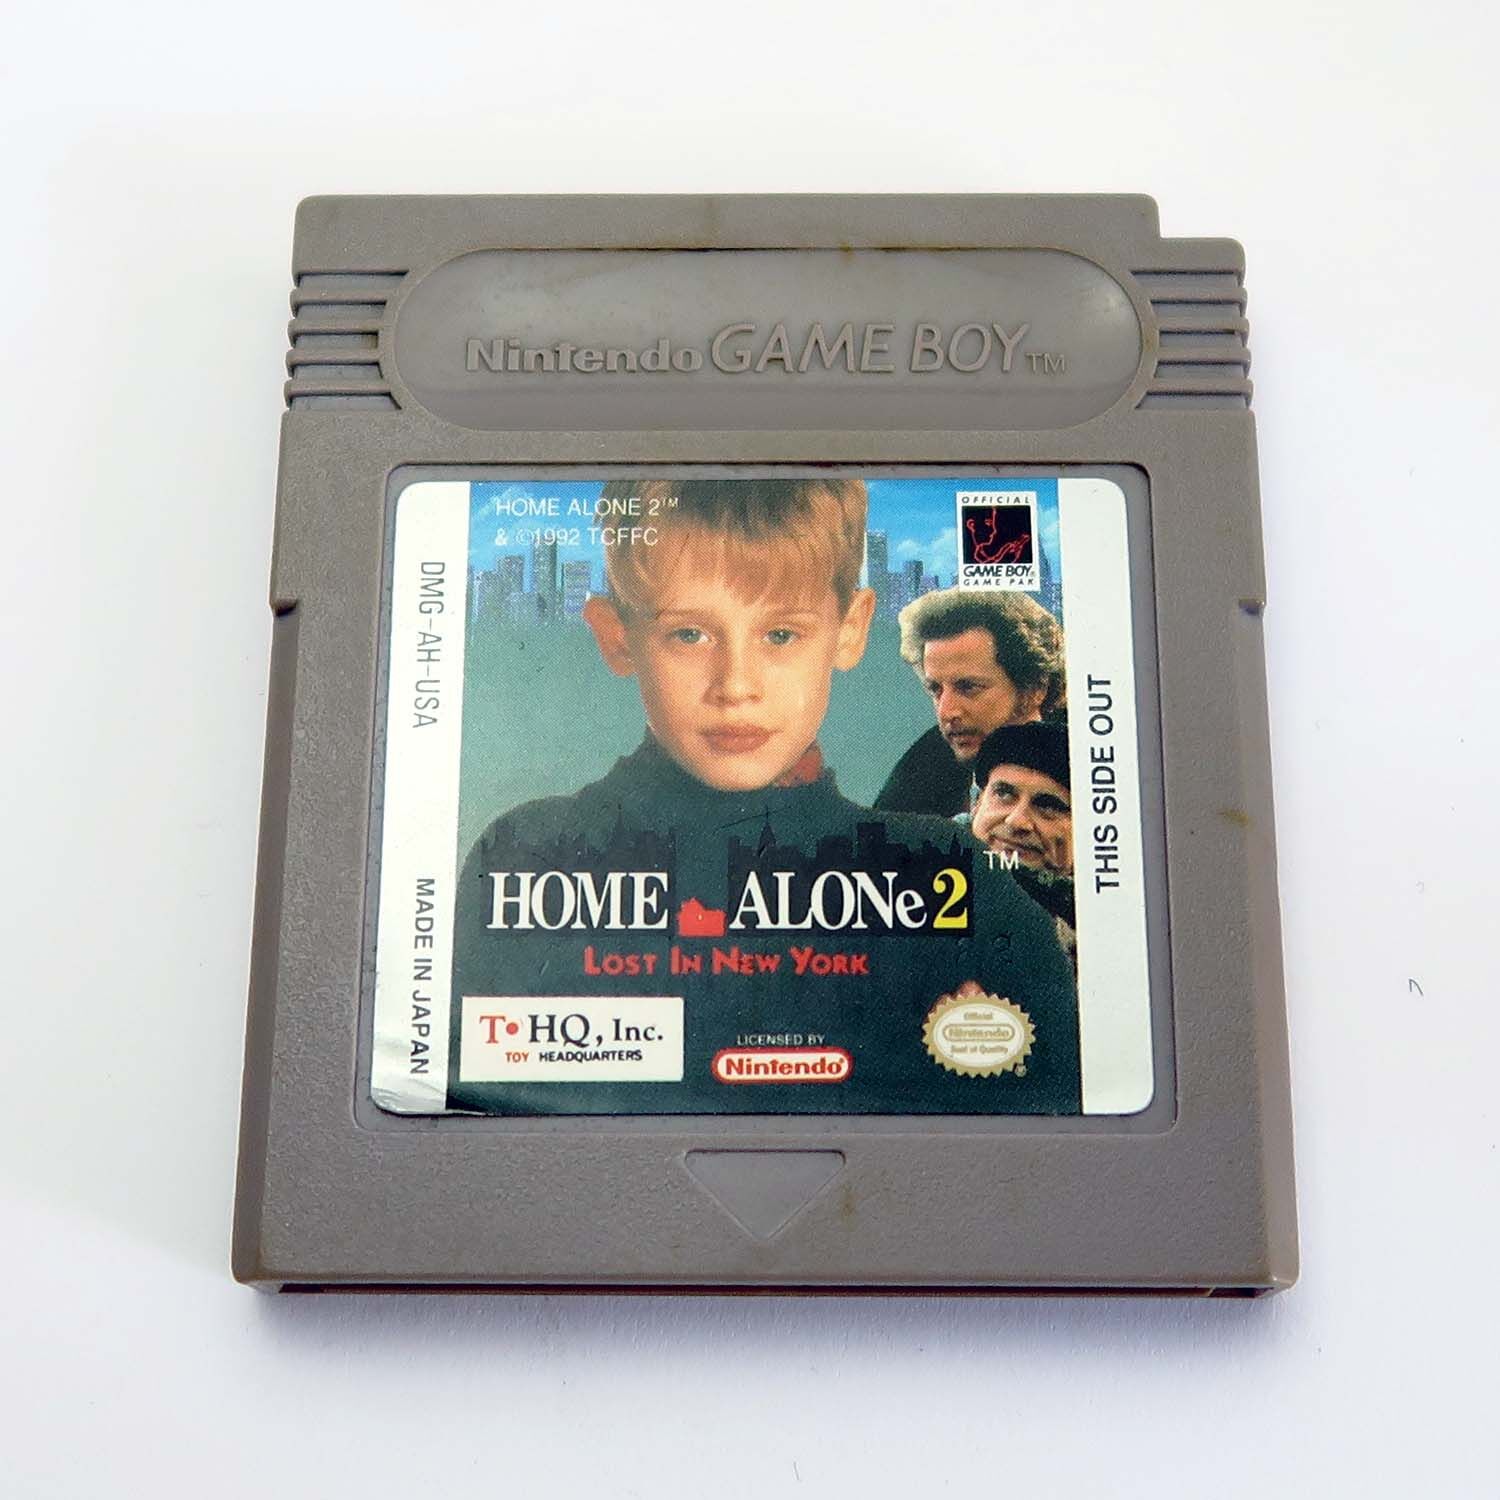 Home Alone 2 - Game Boy